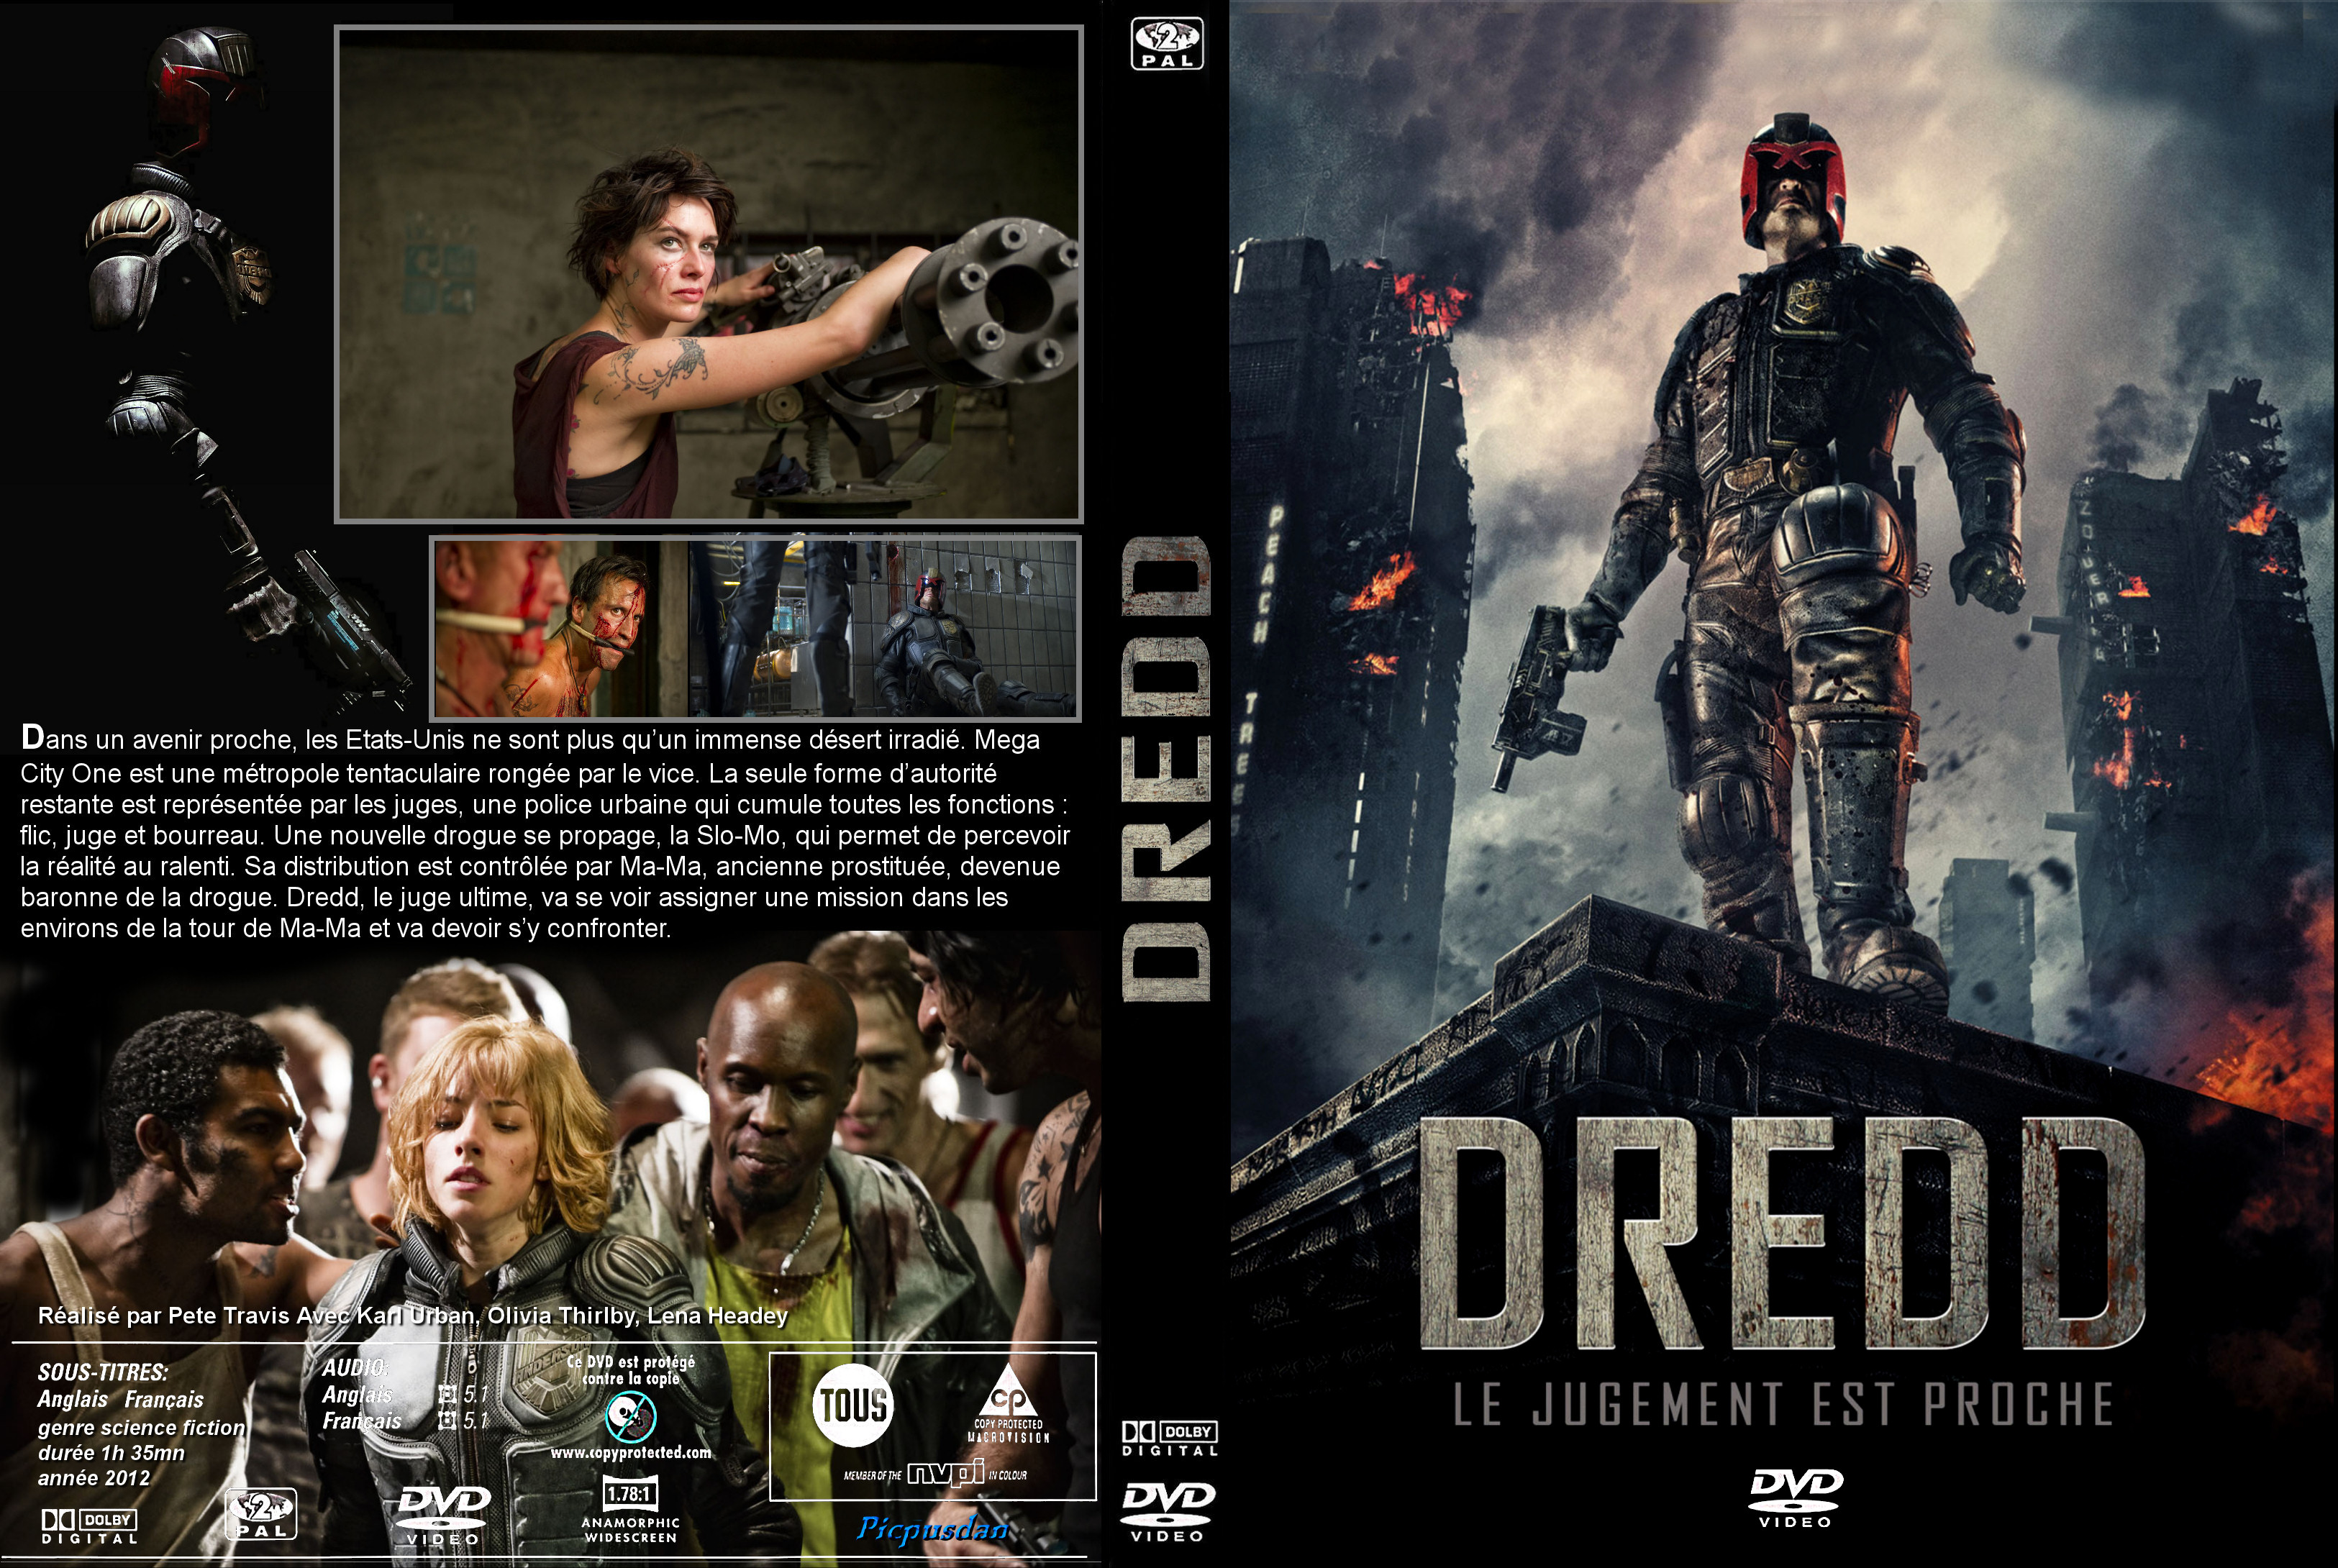 Jaquette DVD Dredd custom